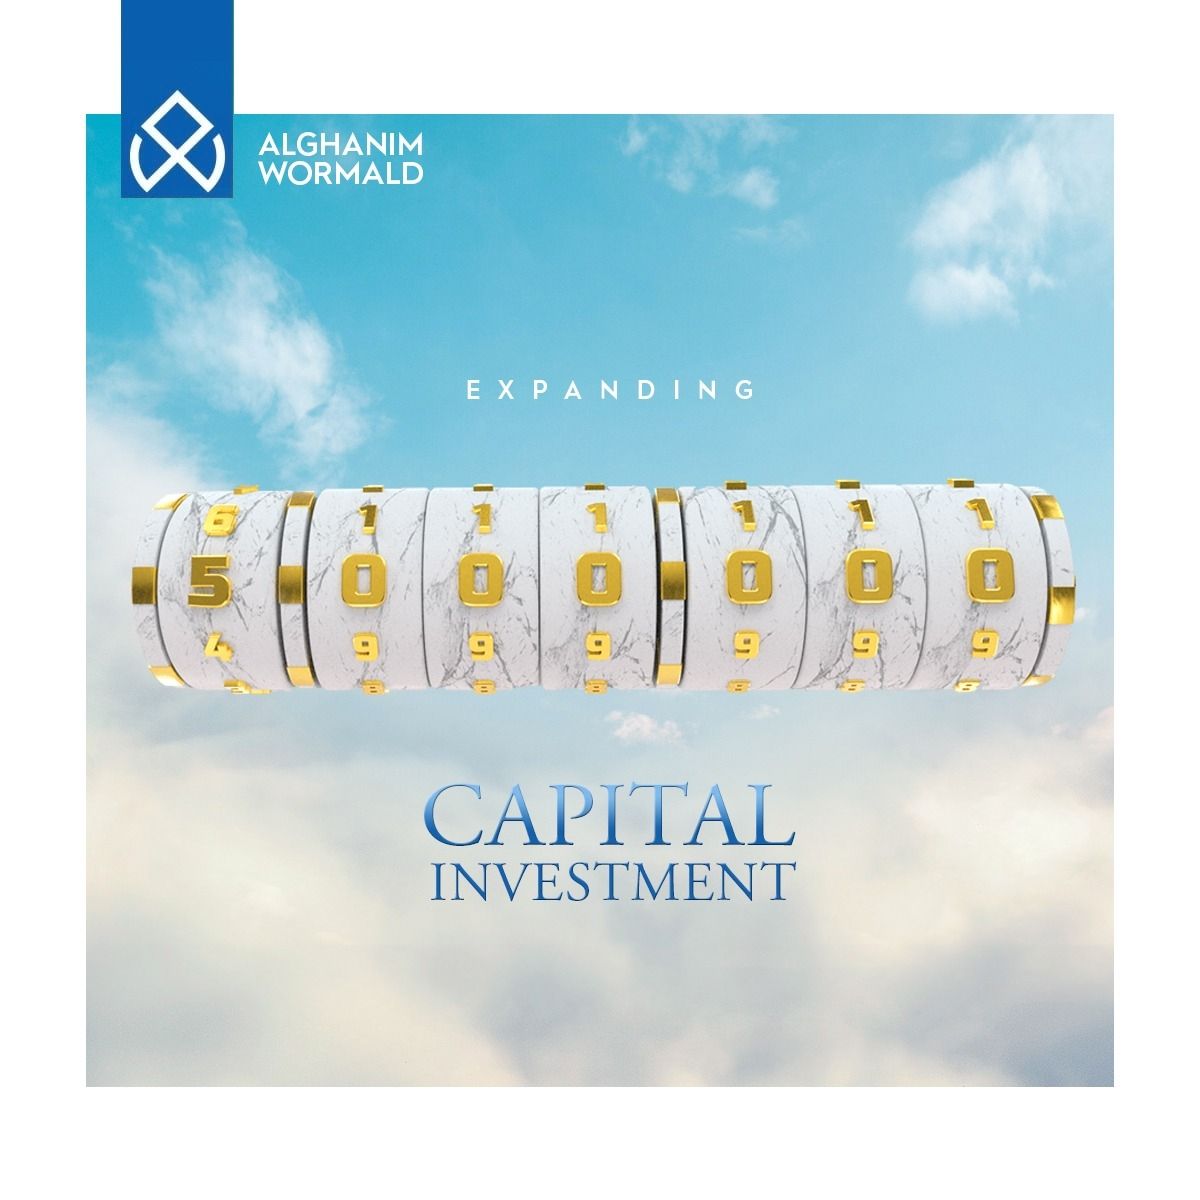 5 million KD Capital Investment